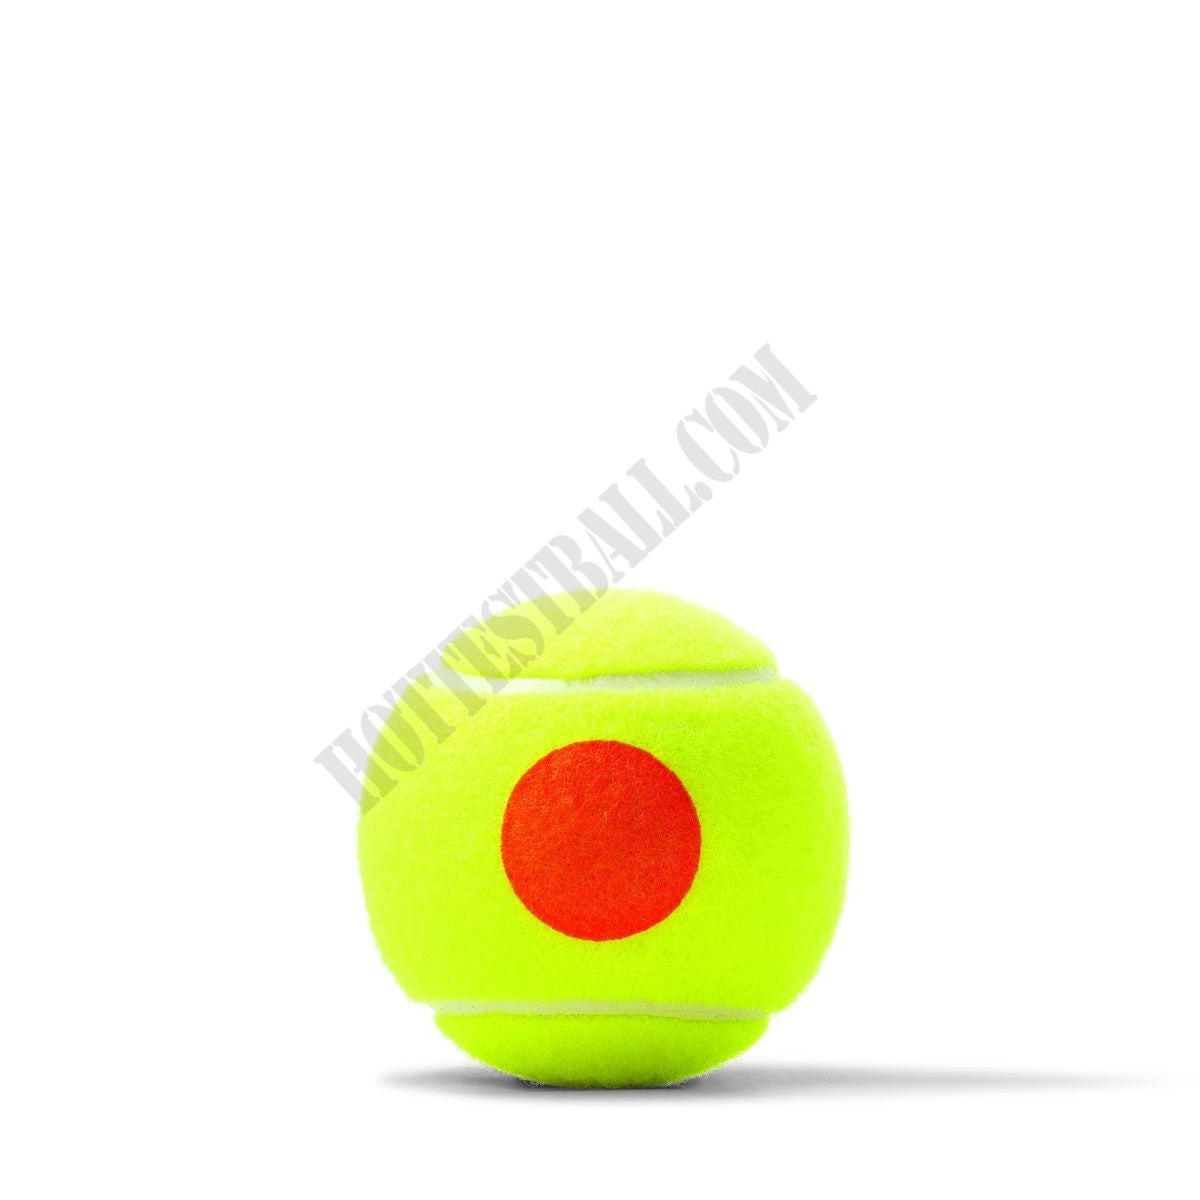 US Open Orange Tournament Transition Tennis Balls - 24 Cans (72 Balls) - Wilson Discount Store - -3